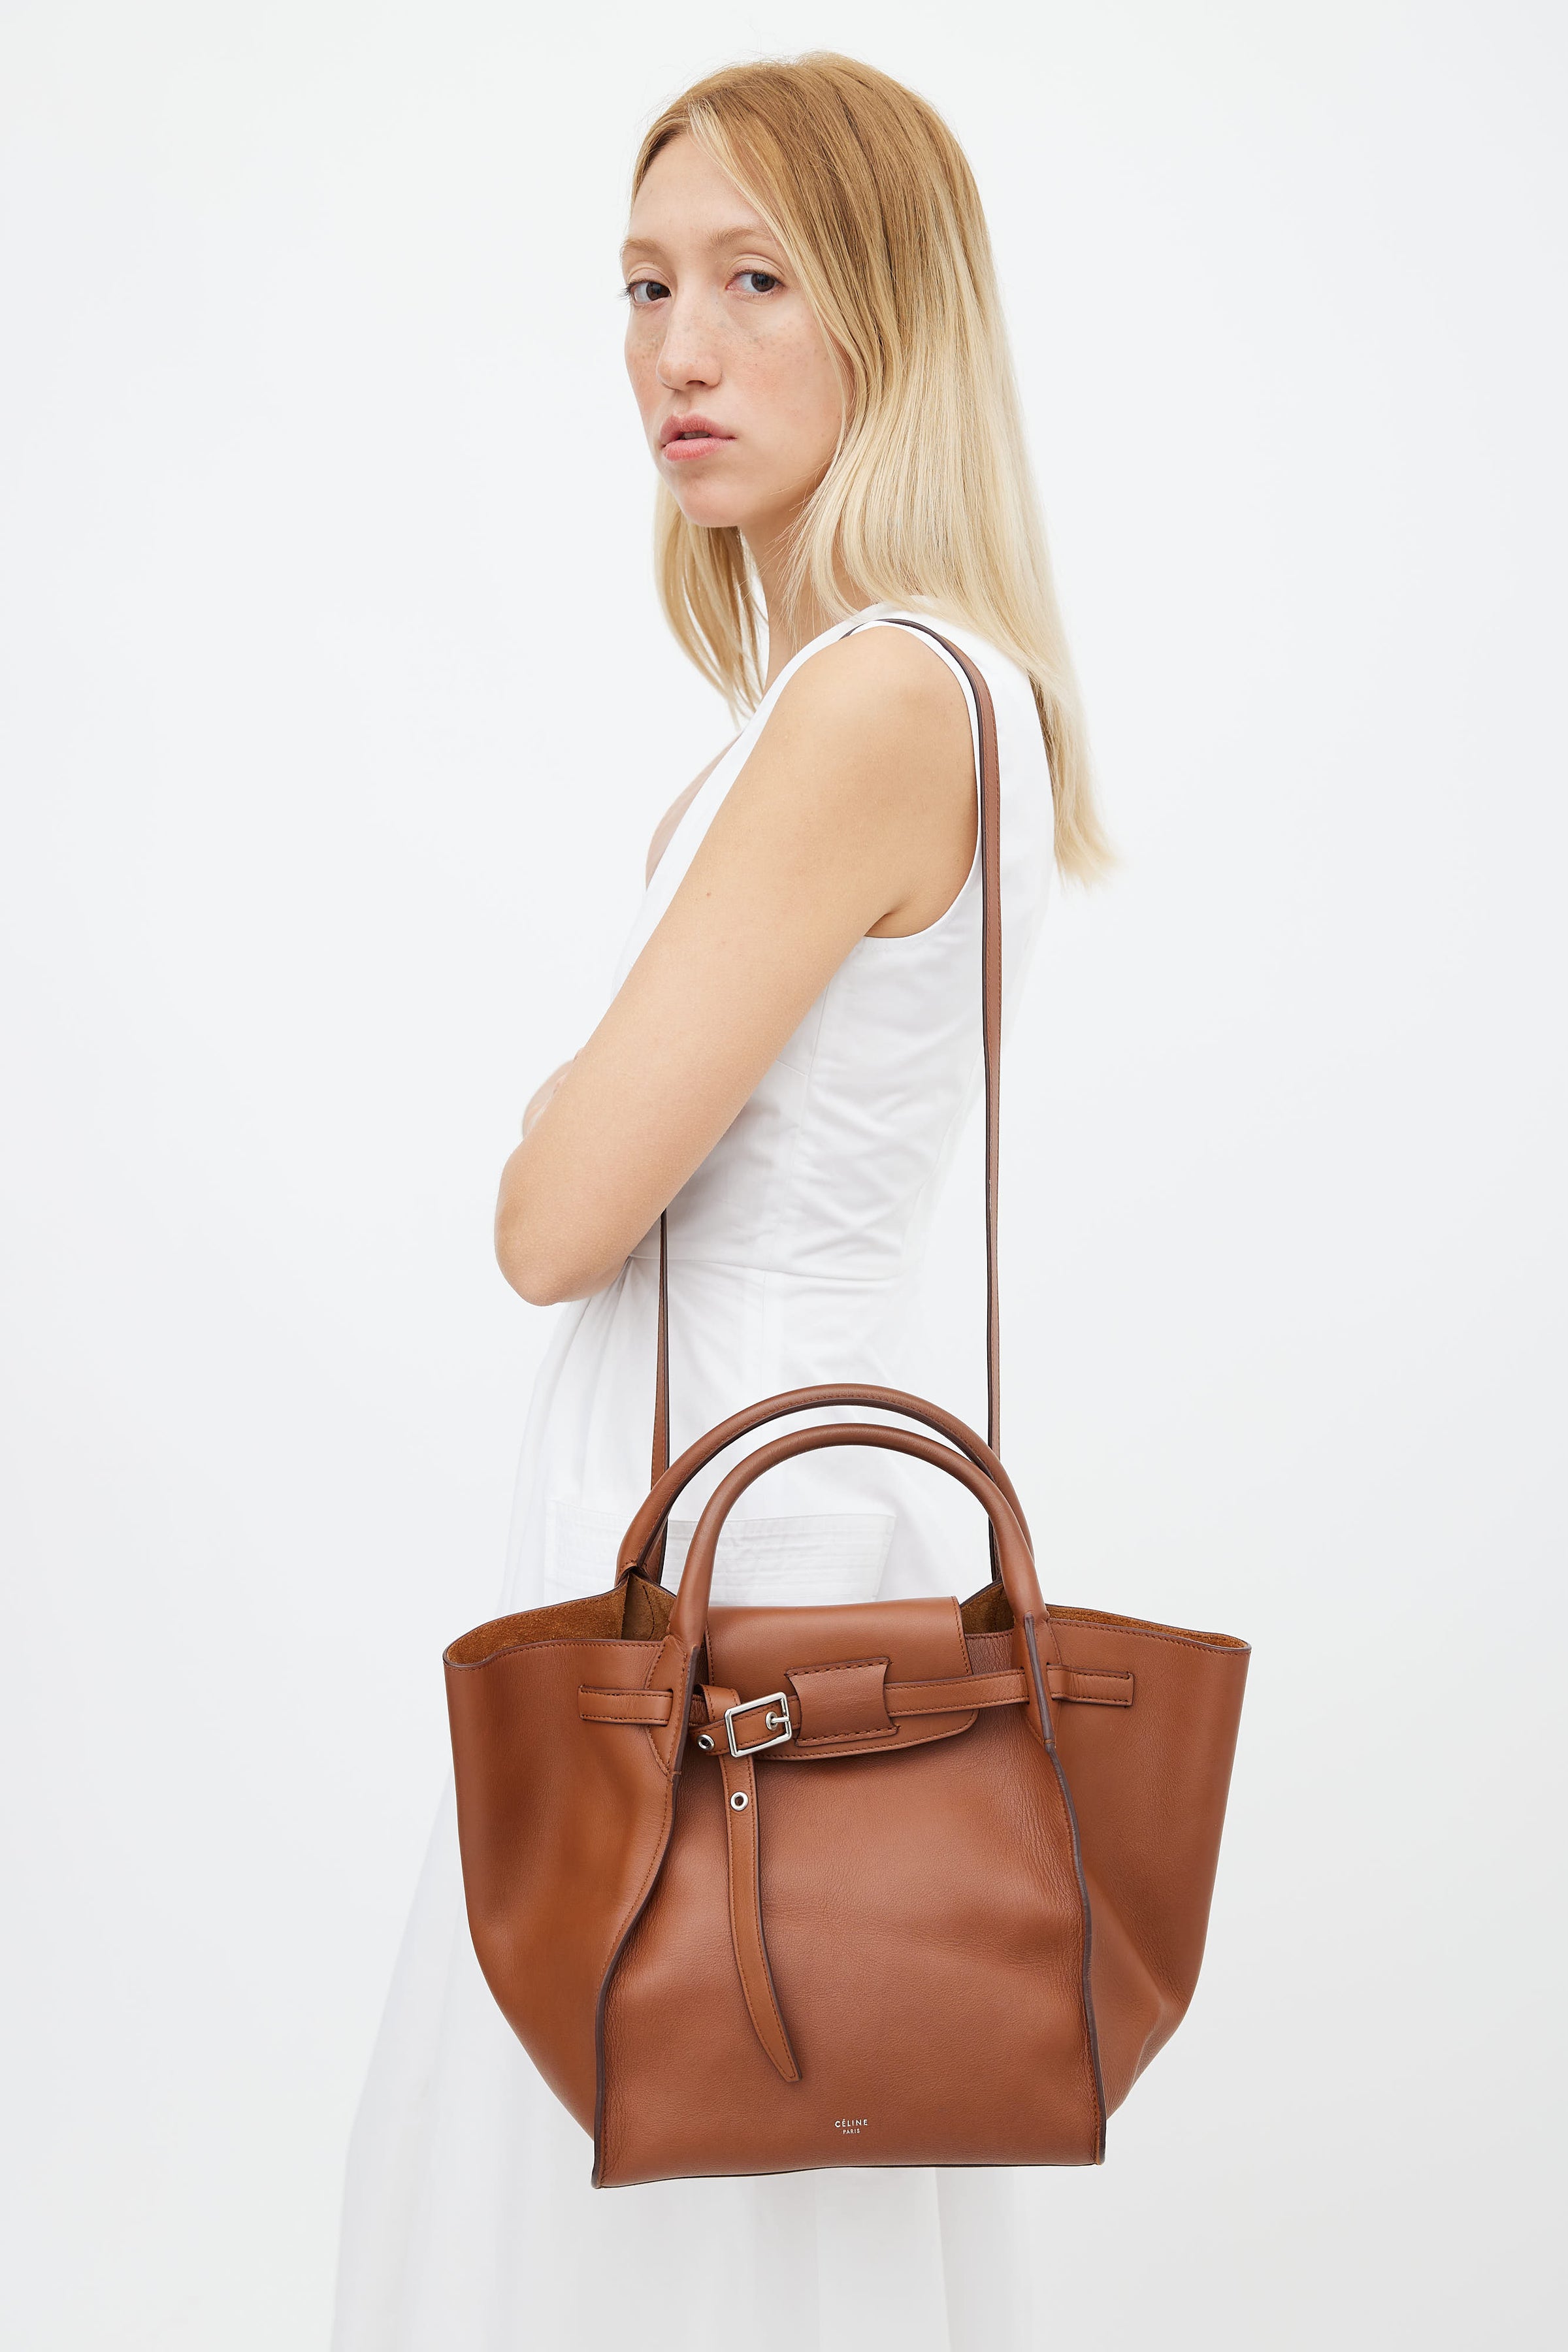 Celine // Green Leather Mini Belt Bag – VSP Consignment